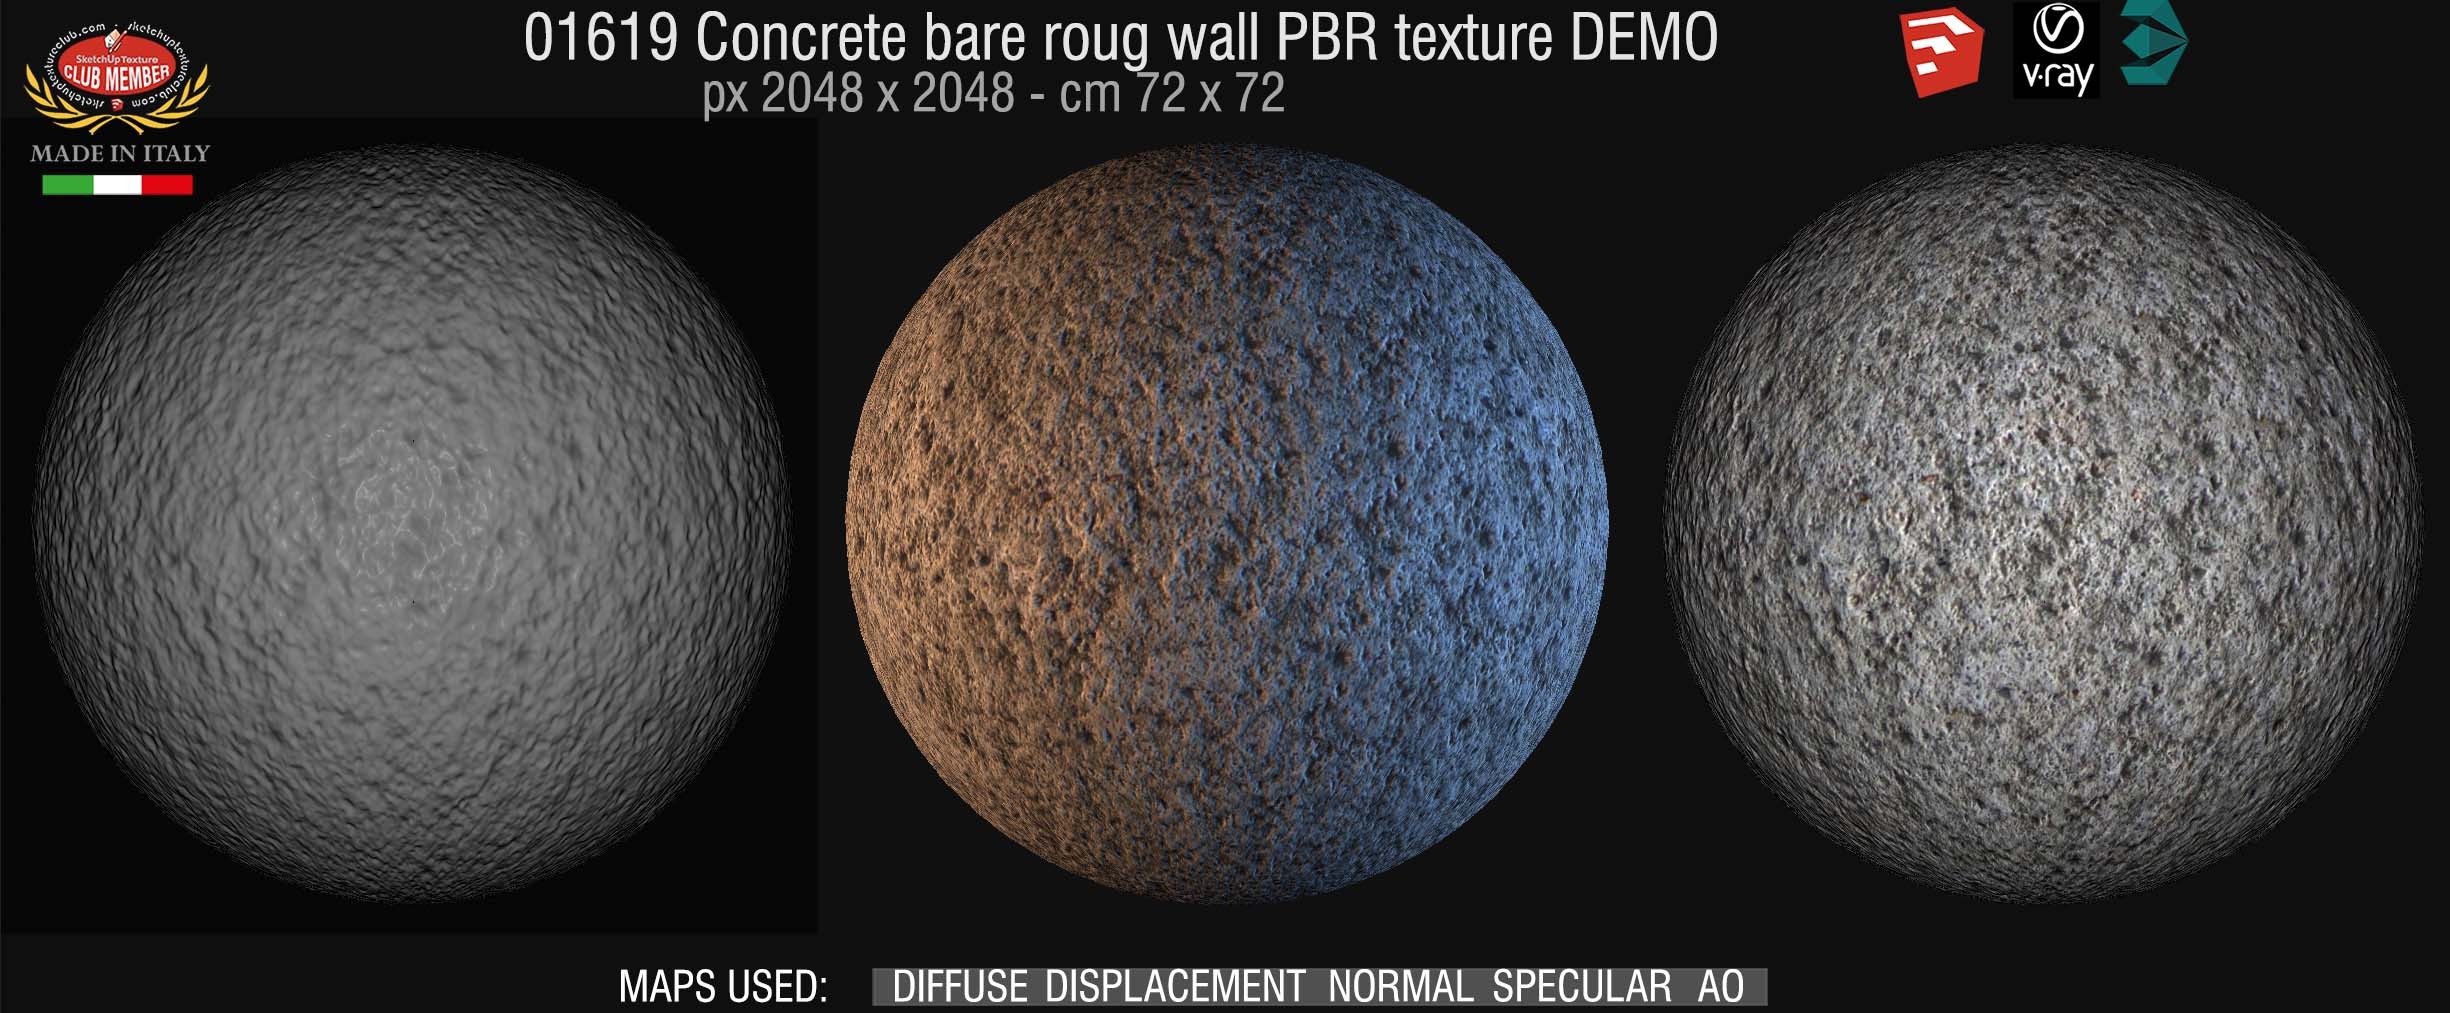 01619 Concrete bare rough wall PBR texture seamless DEMO